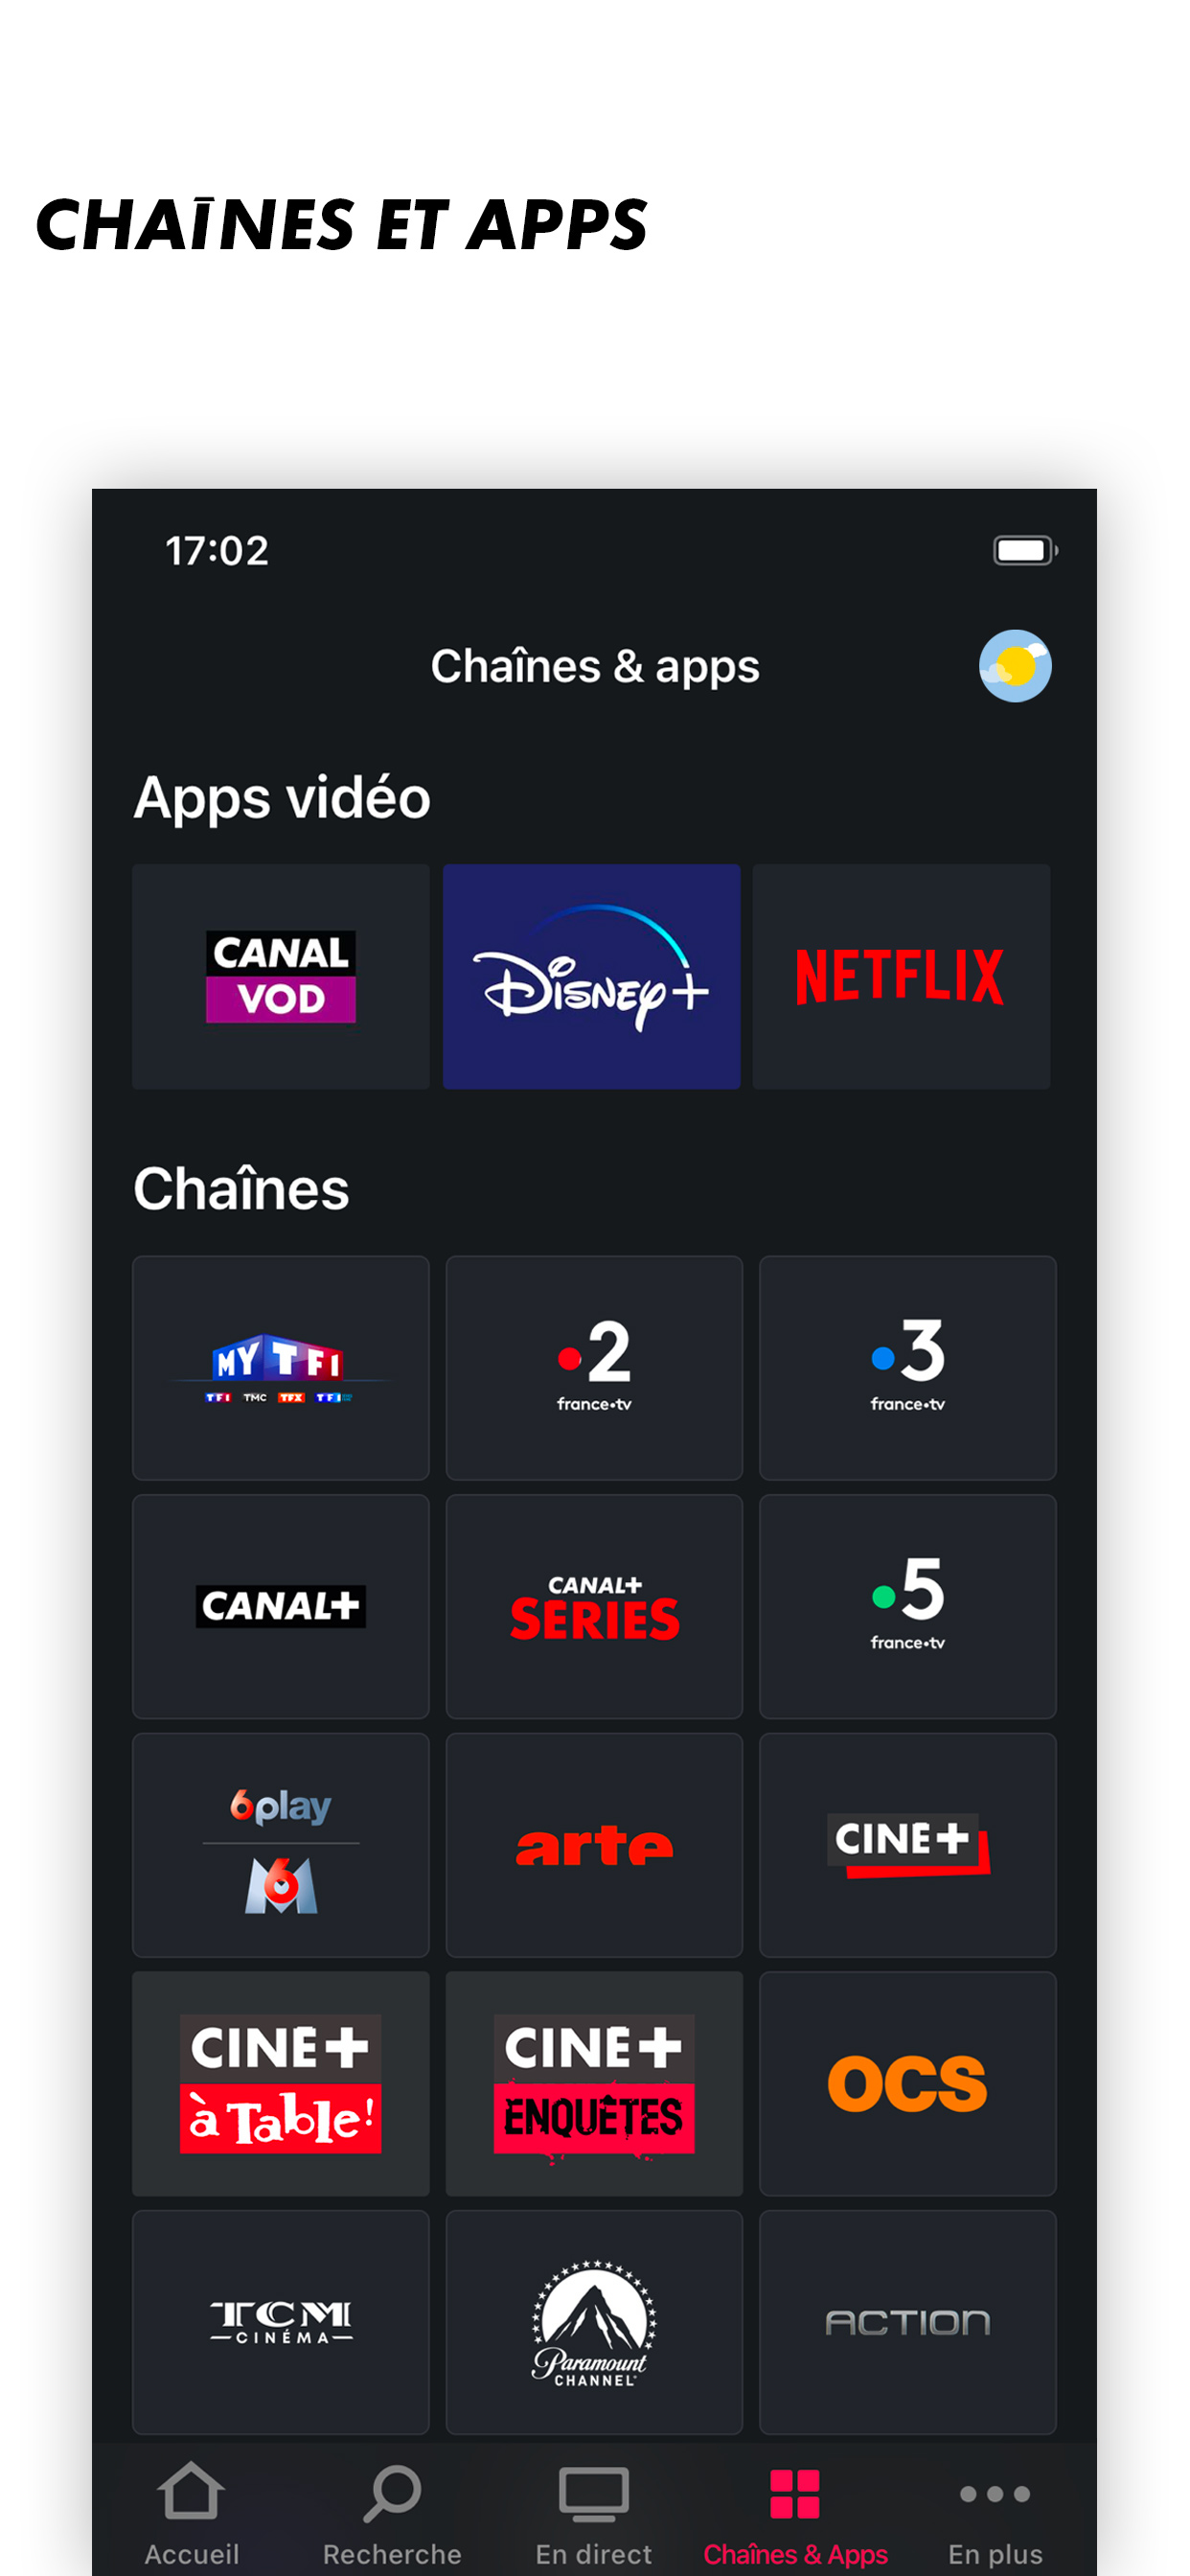 Android application myCANAL, TV en live et replay screenshort